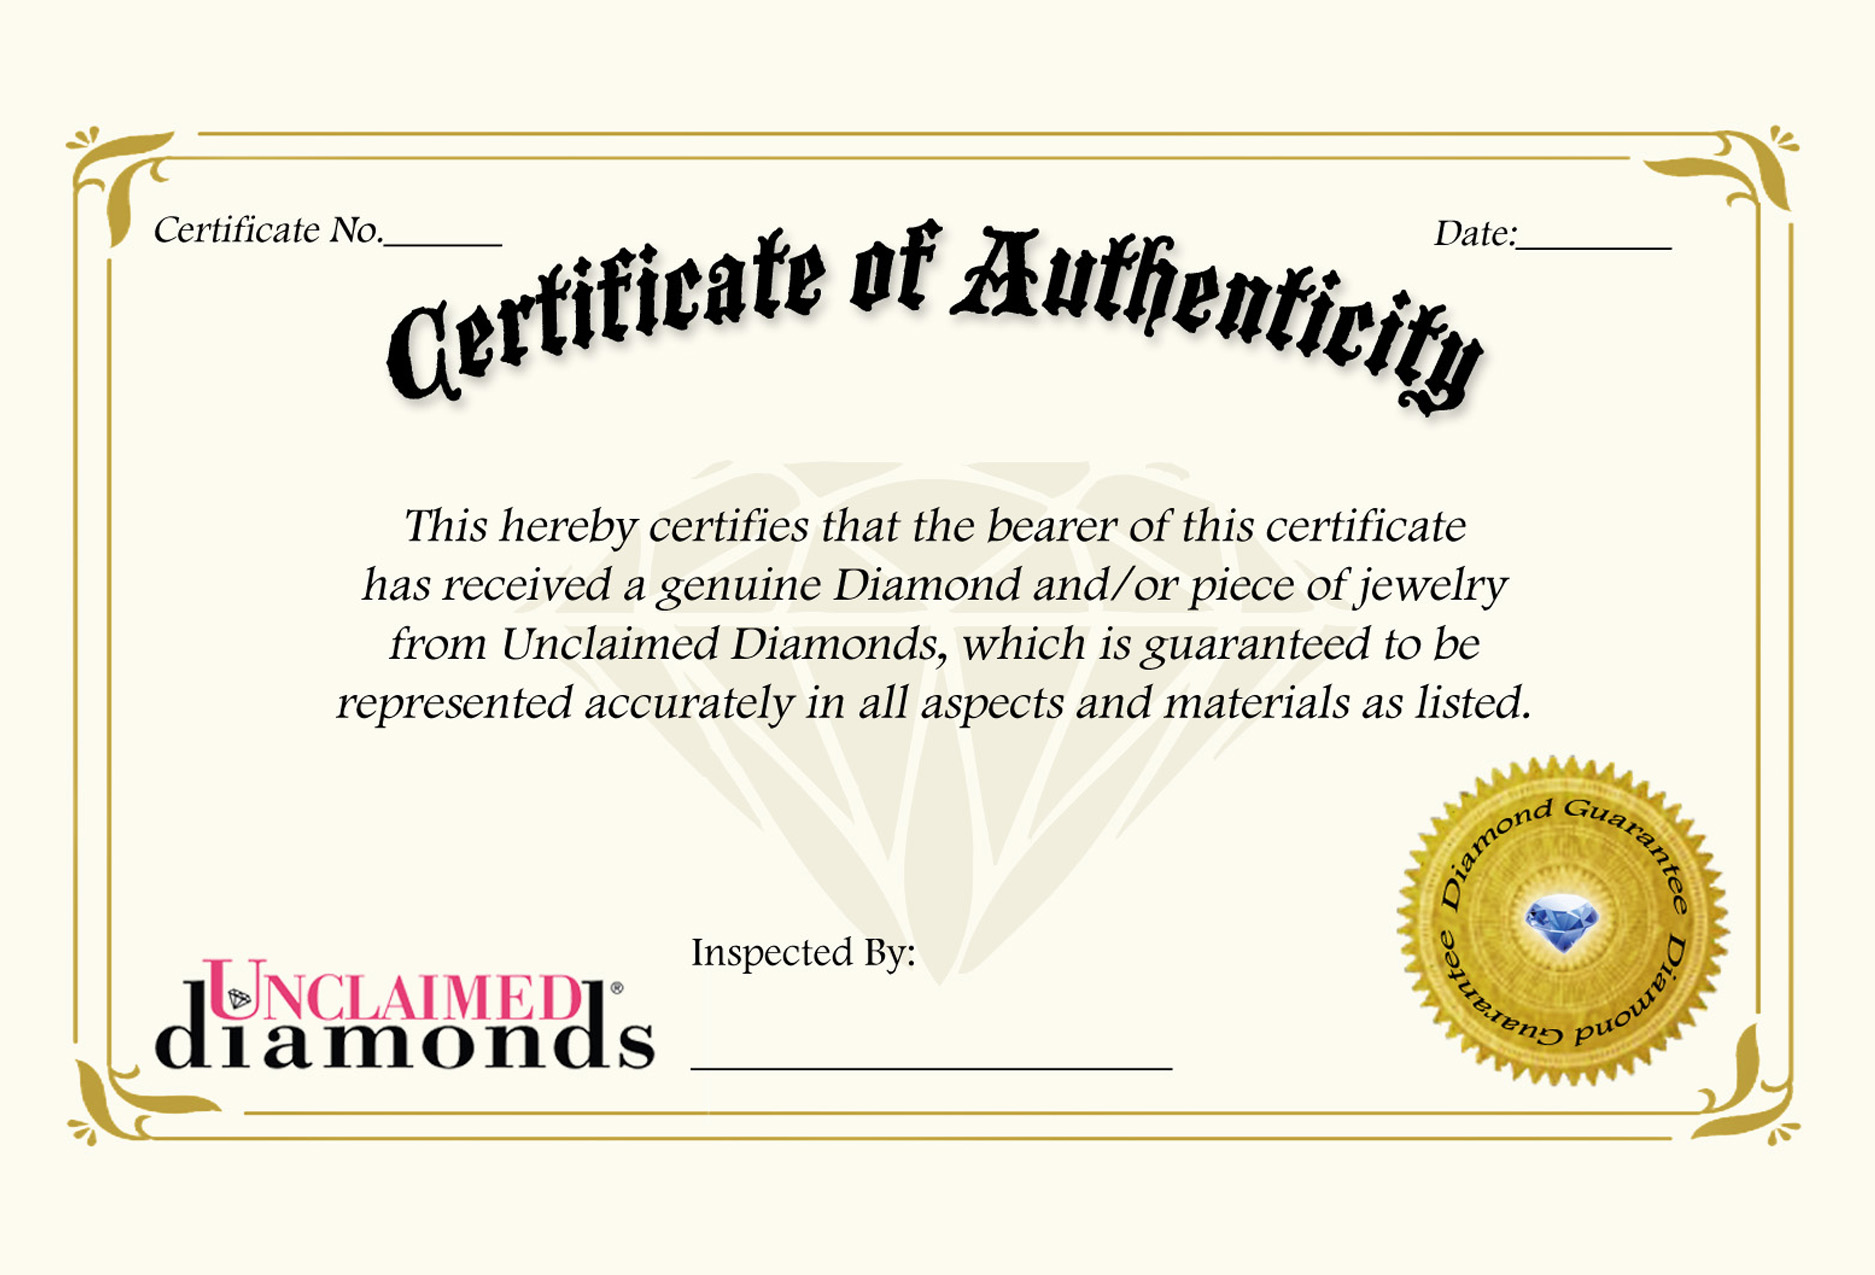 Unclaimed Diamonds Certificate of Authenticity Unclaimed Diamonds